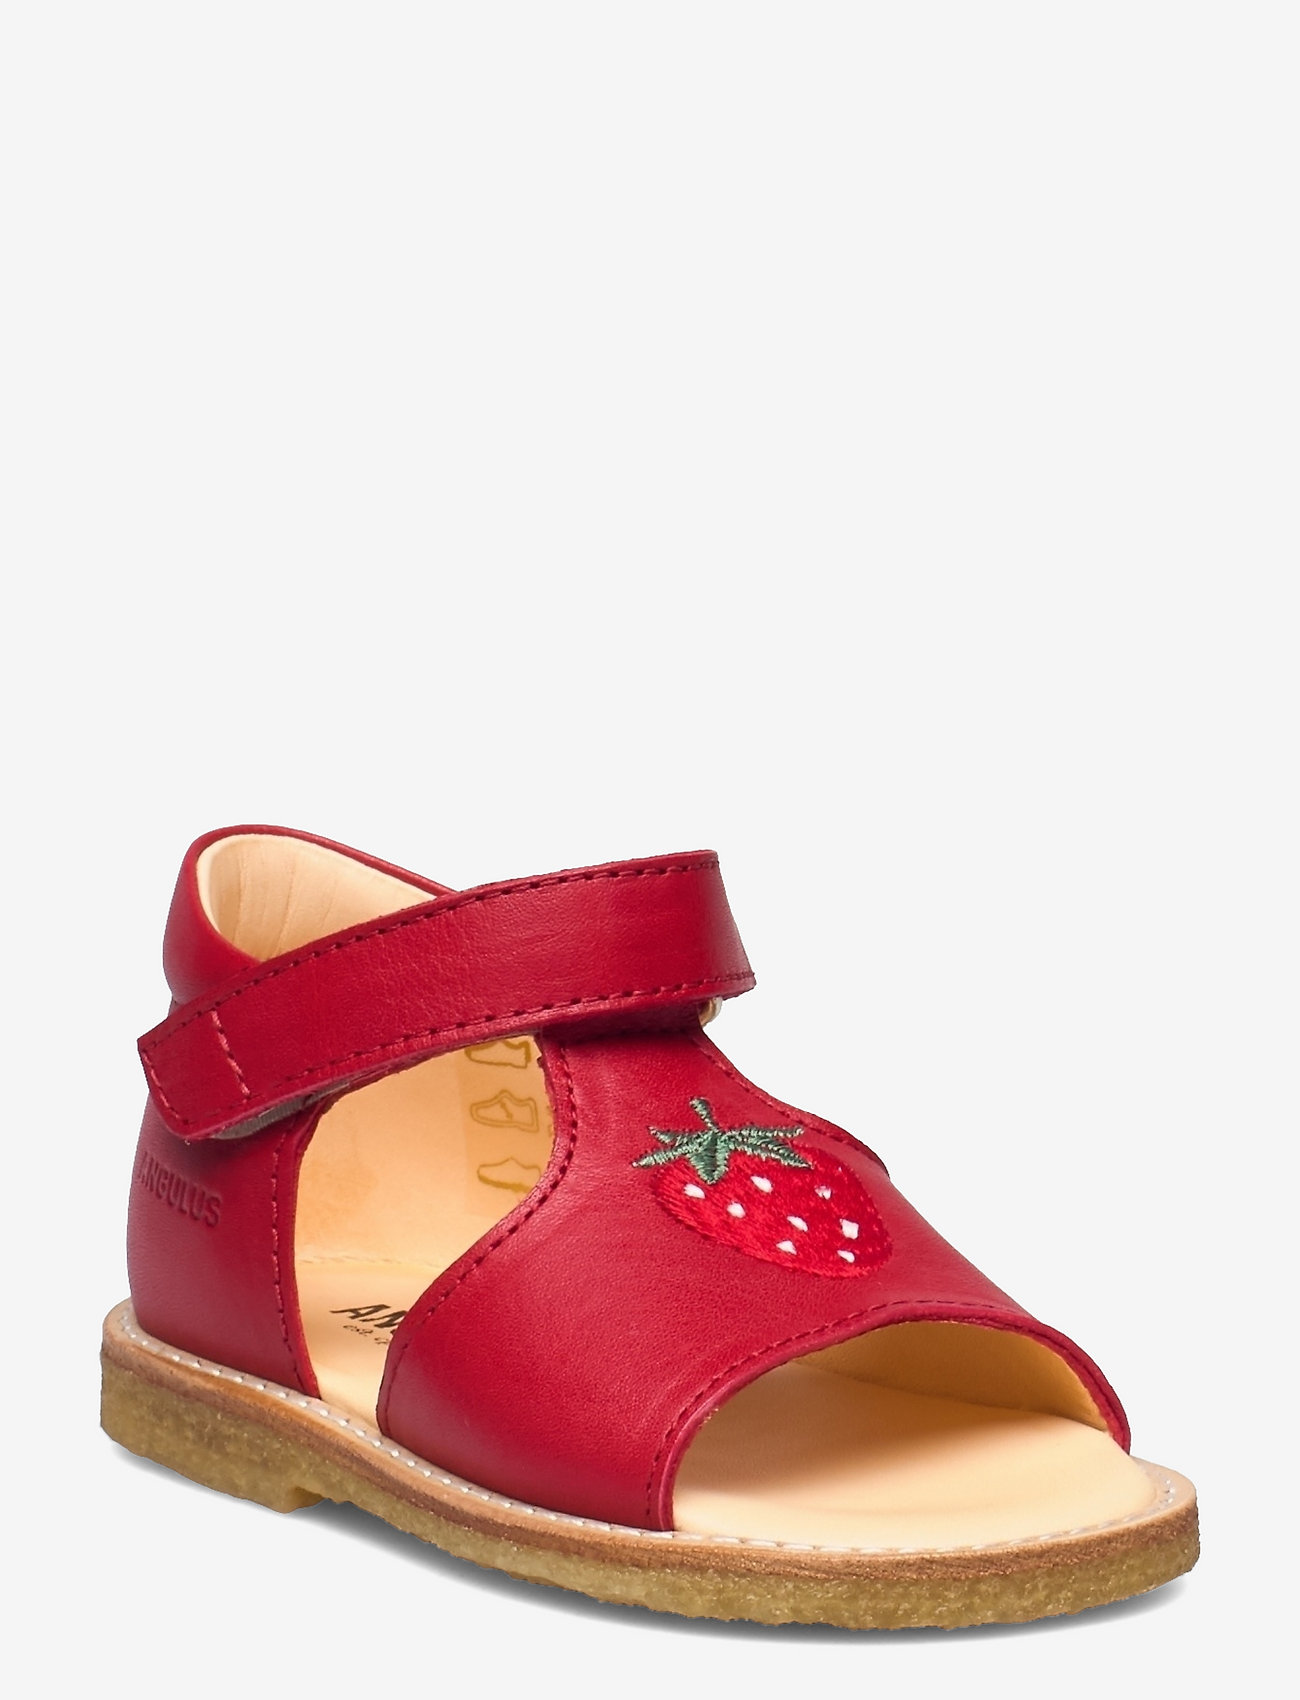 ANGULUS - Sandals - flat - open toe - clo - 1412 red - 0